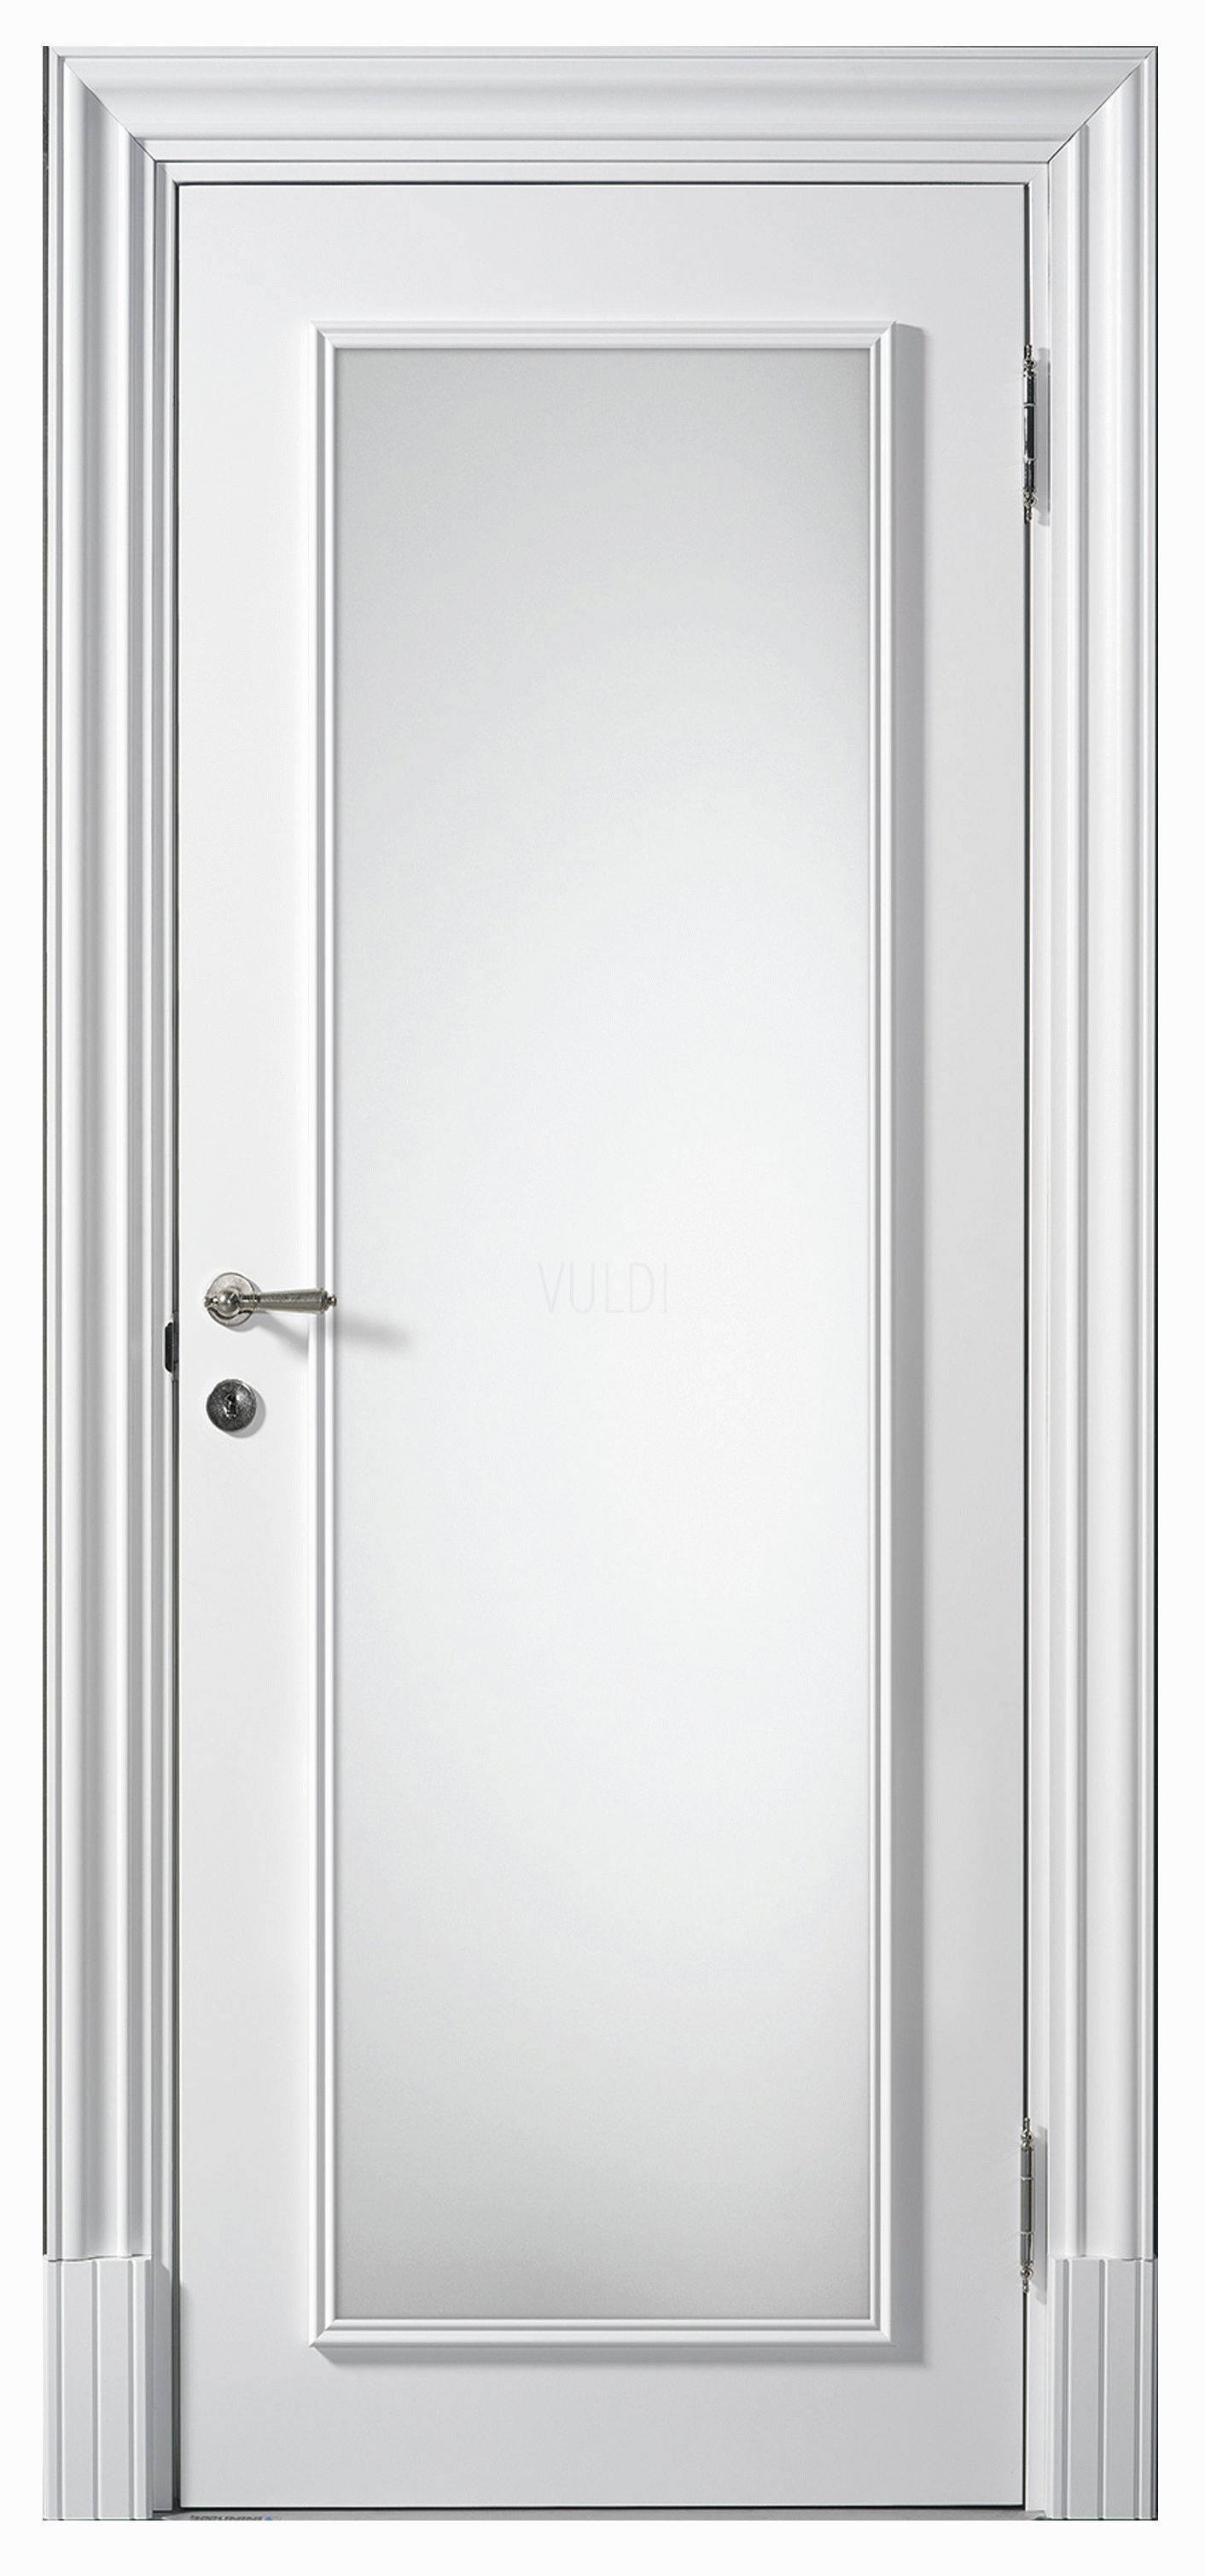  Potenza classico 130 PZ Interior Door image from VULDI COMPANY